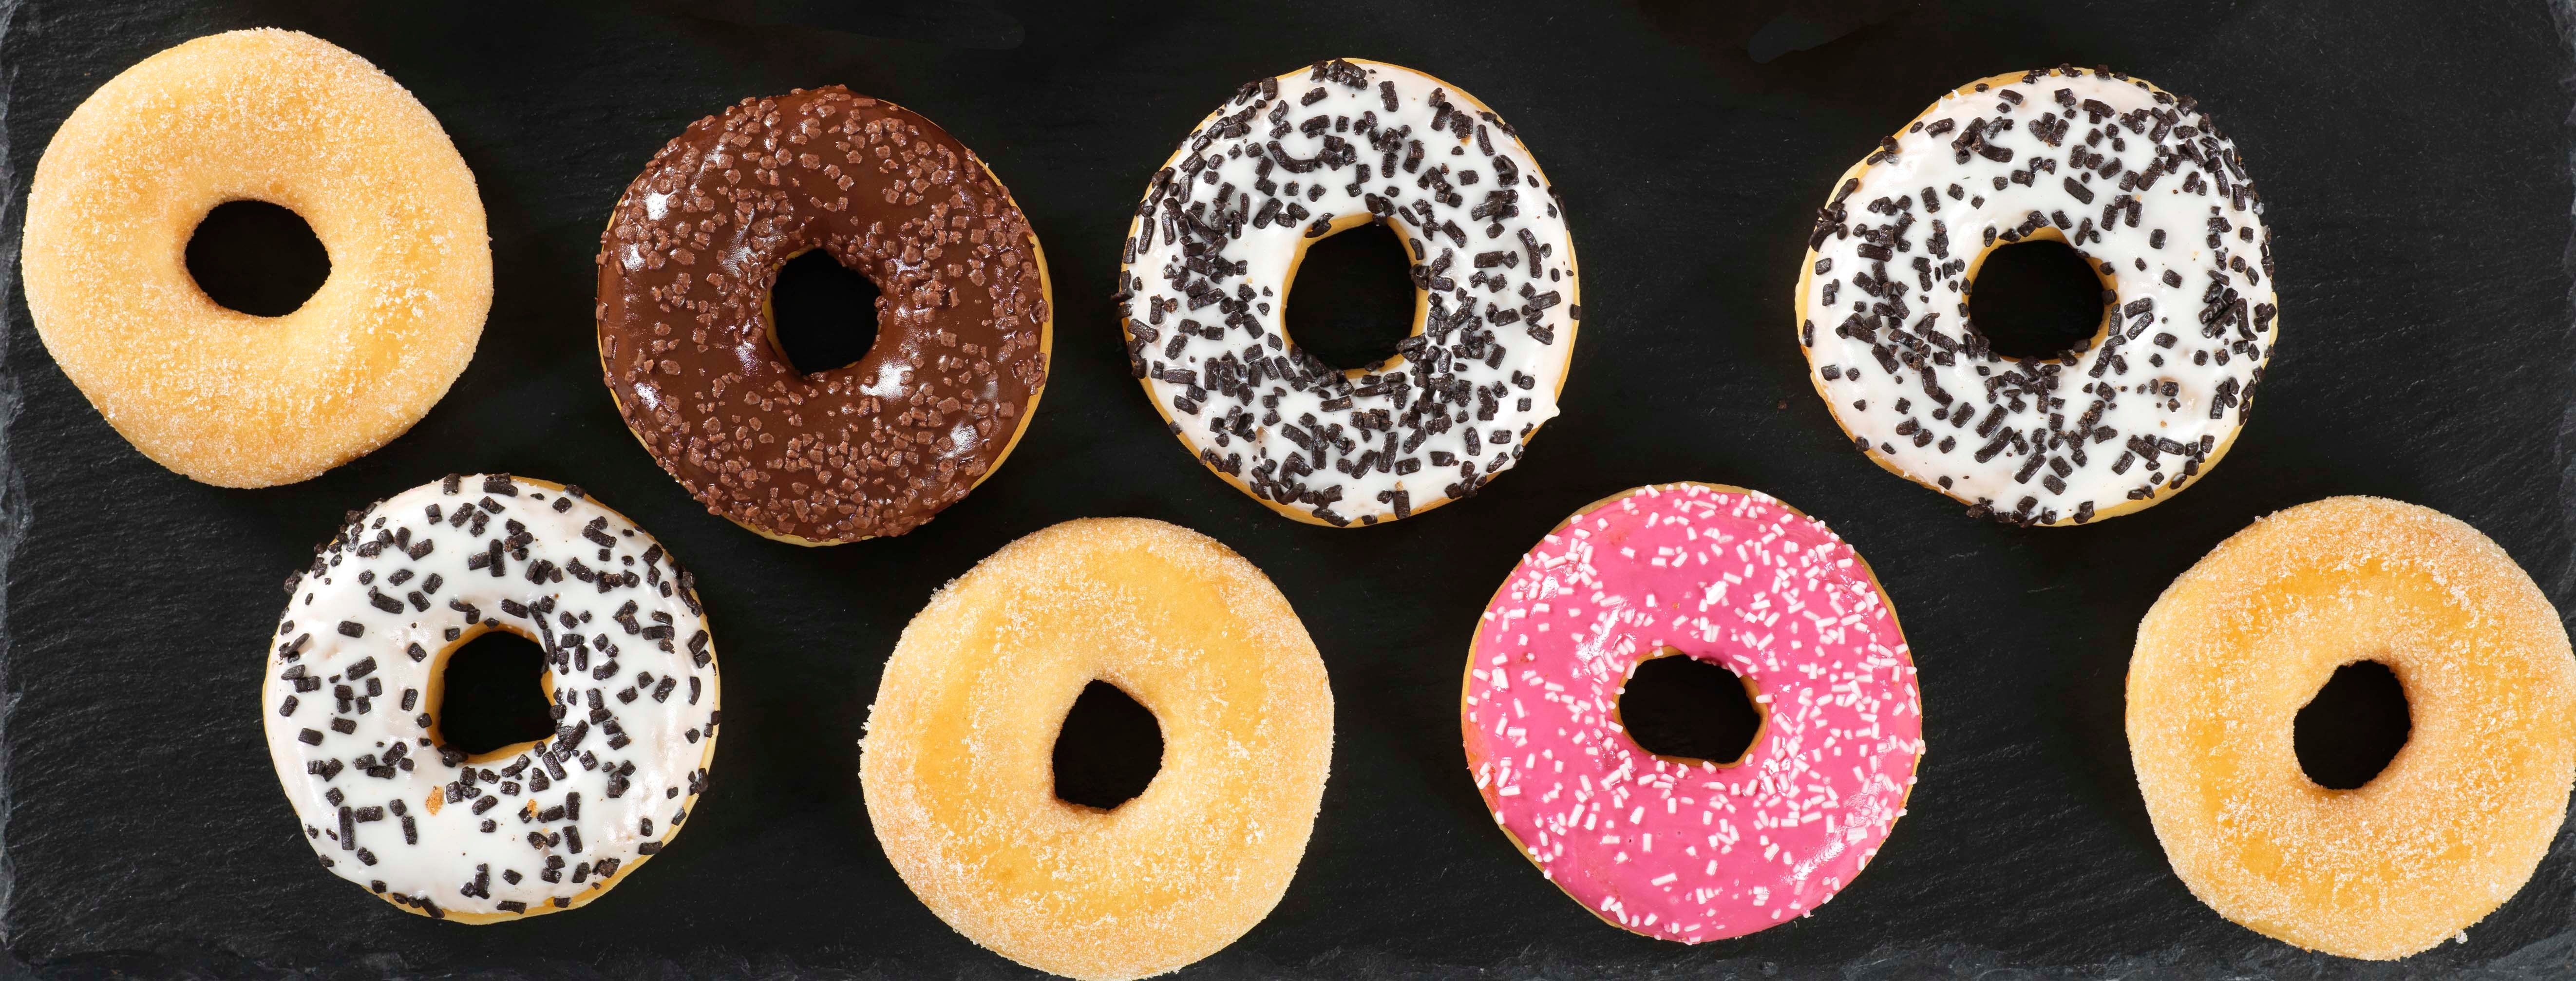 Donuts med ulik topping